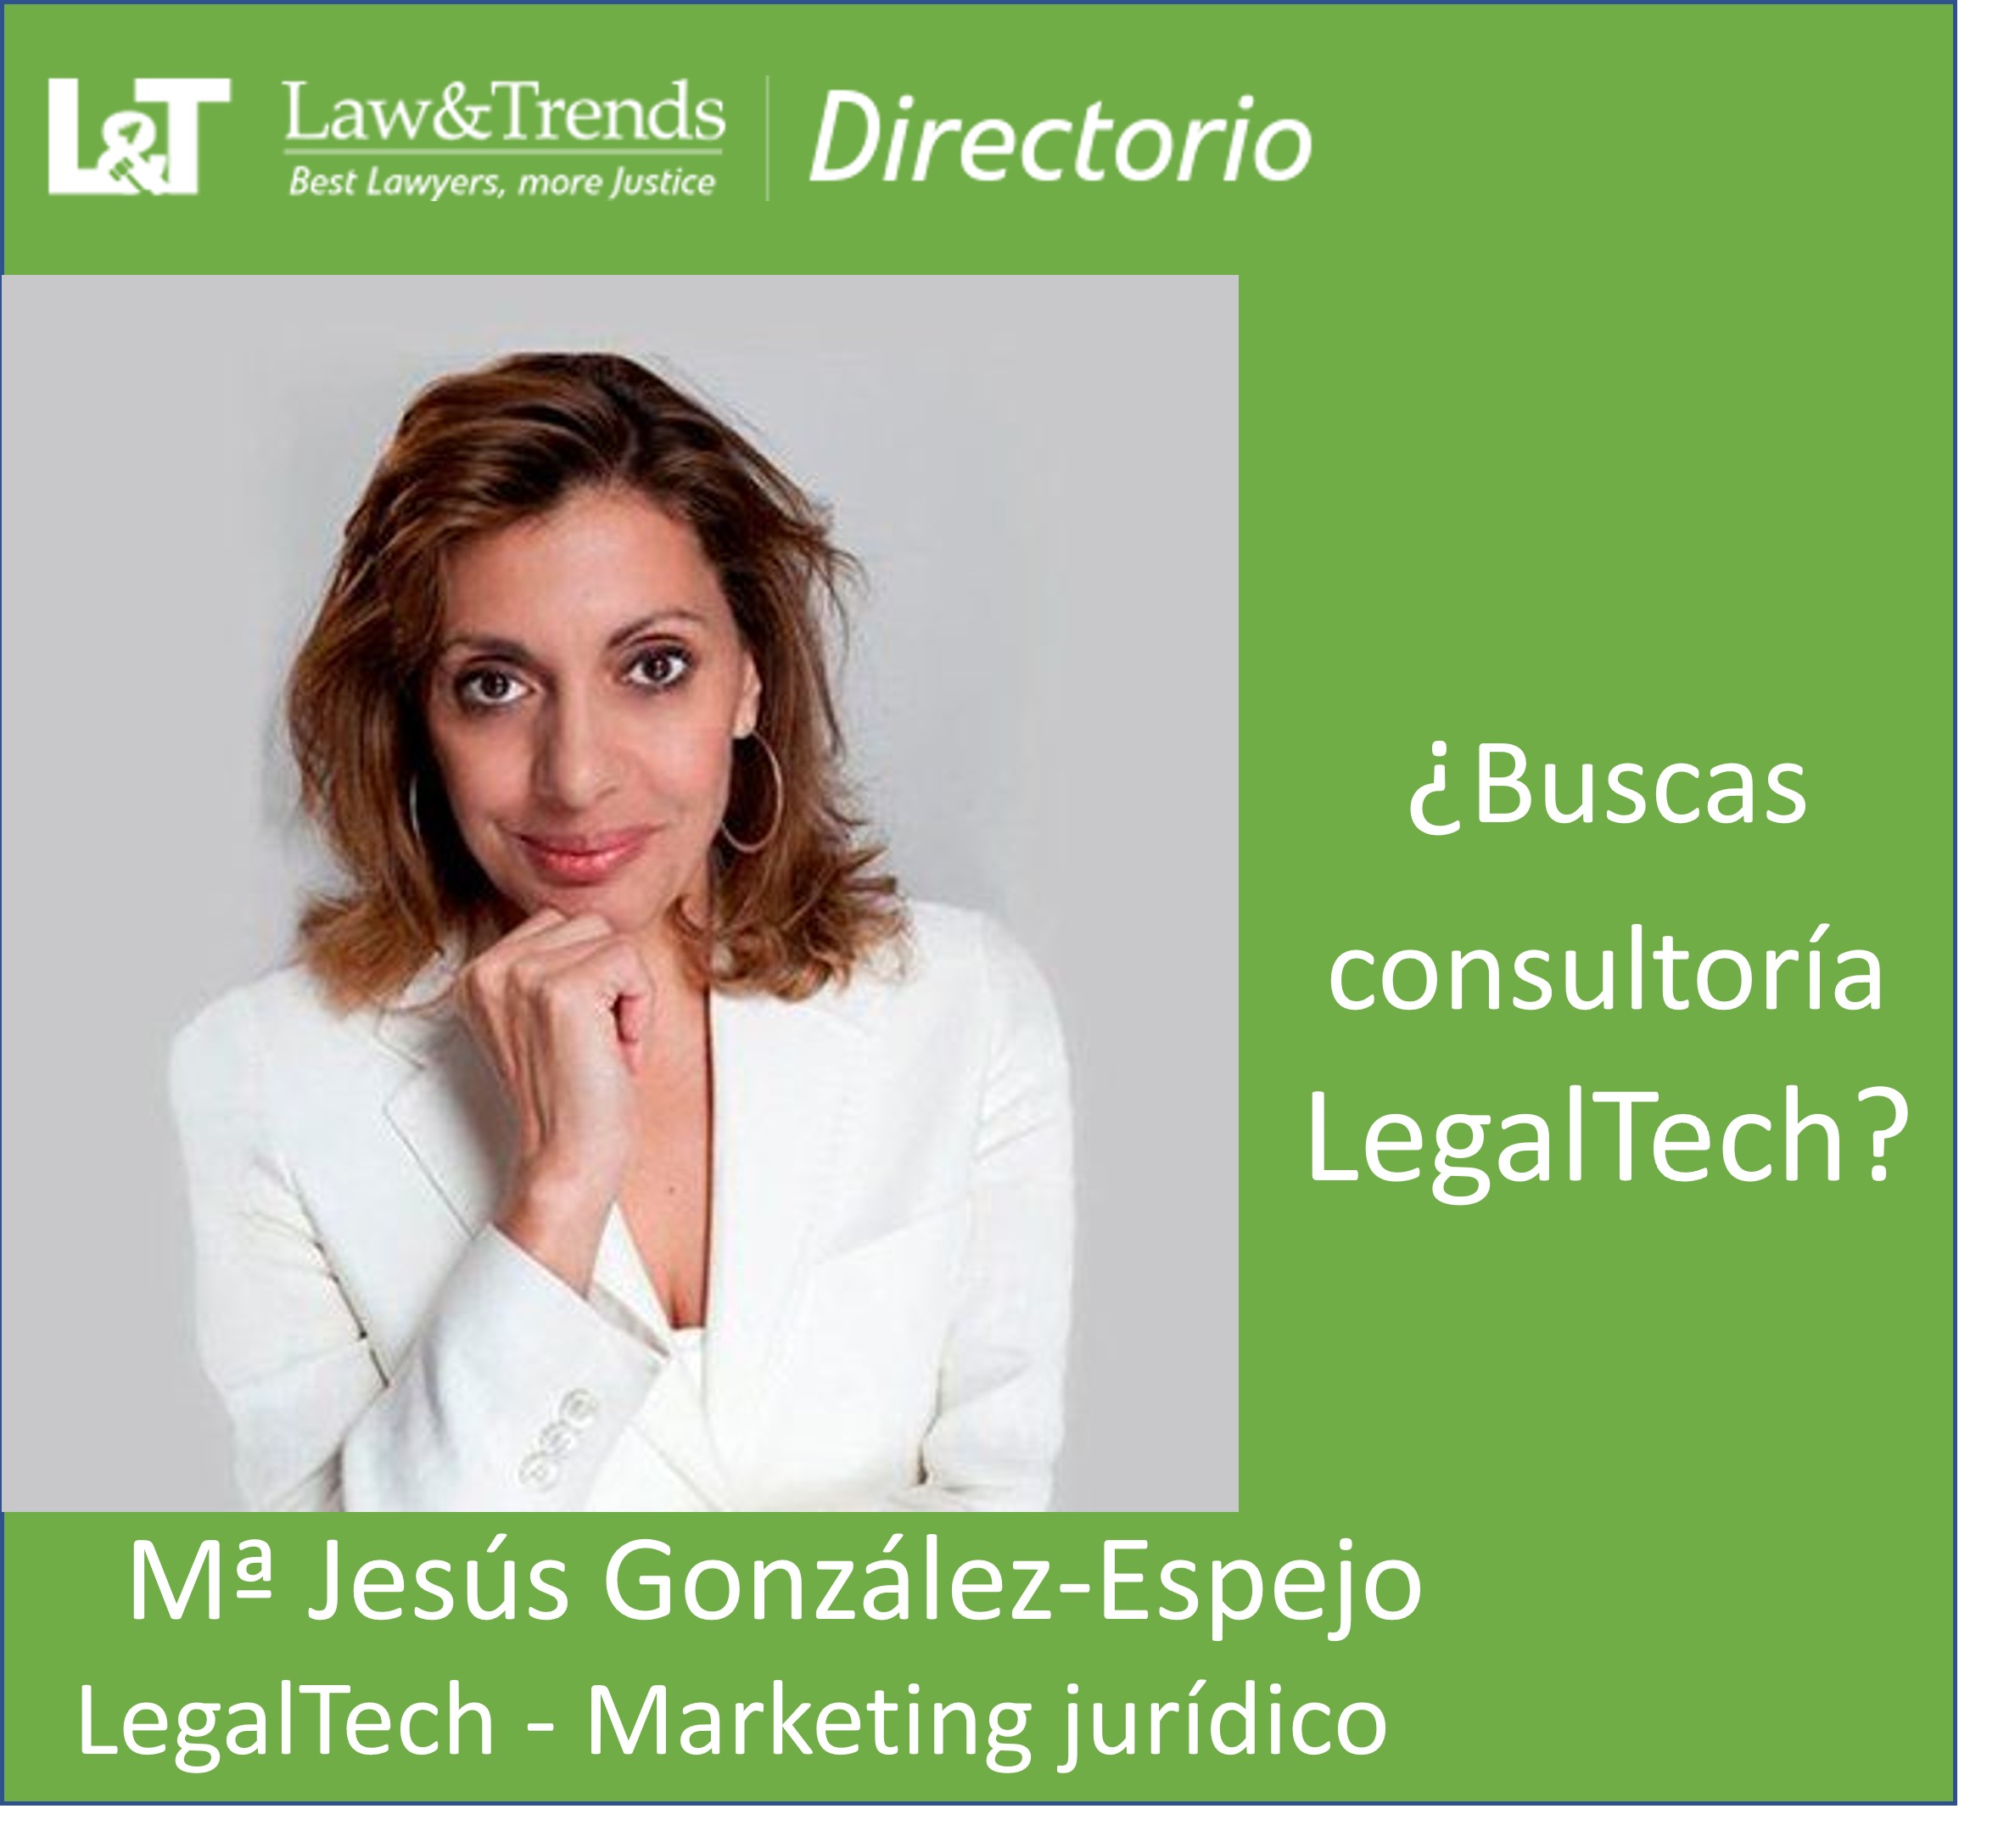 Mª Jesús González Espejo Instituto de Innovación Jurídica abogados madrid
